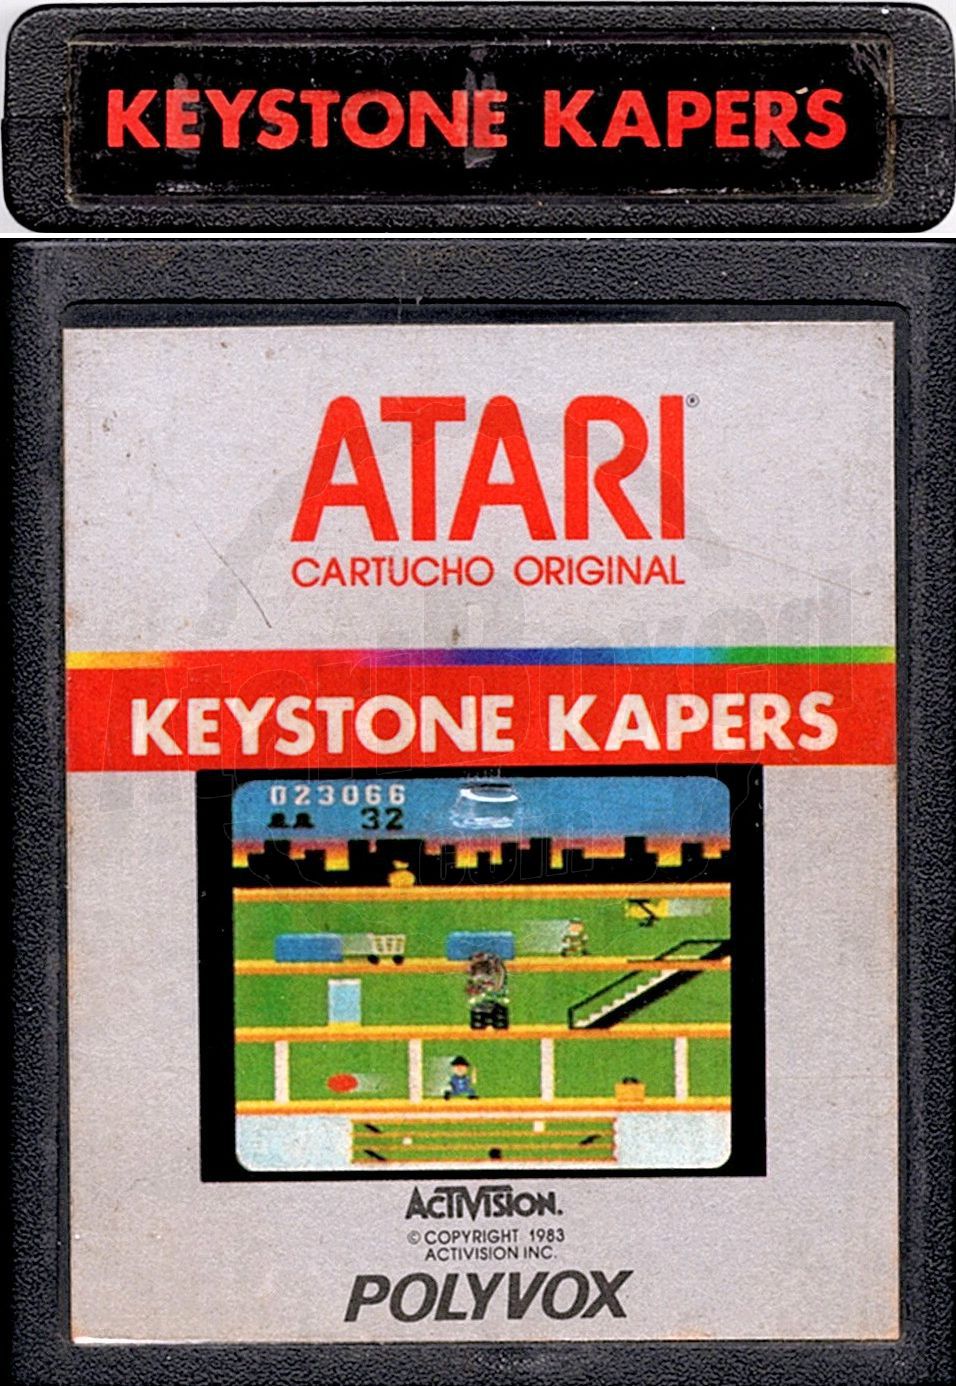 Atari 2600: Enduro, Plaque Attack, Keystone Kapers (Jun 17, 1983